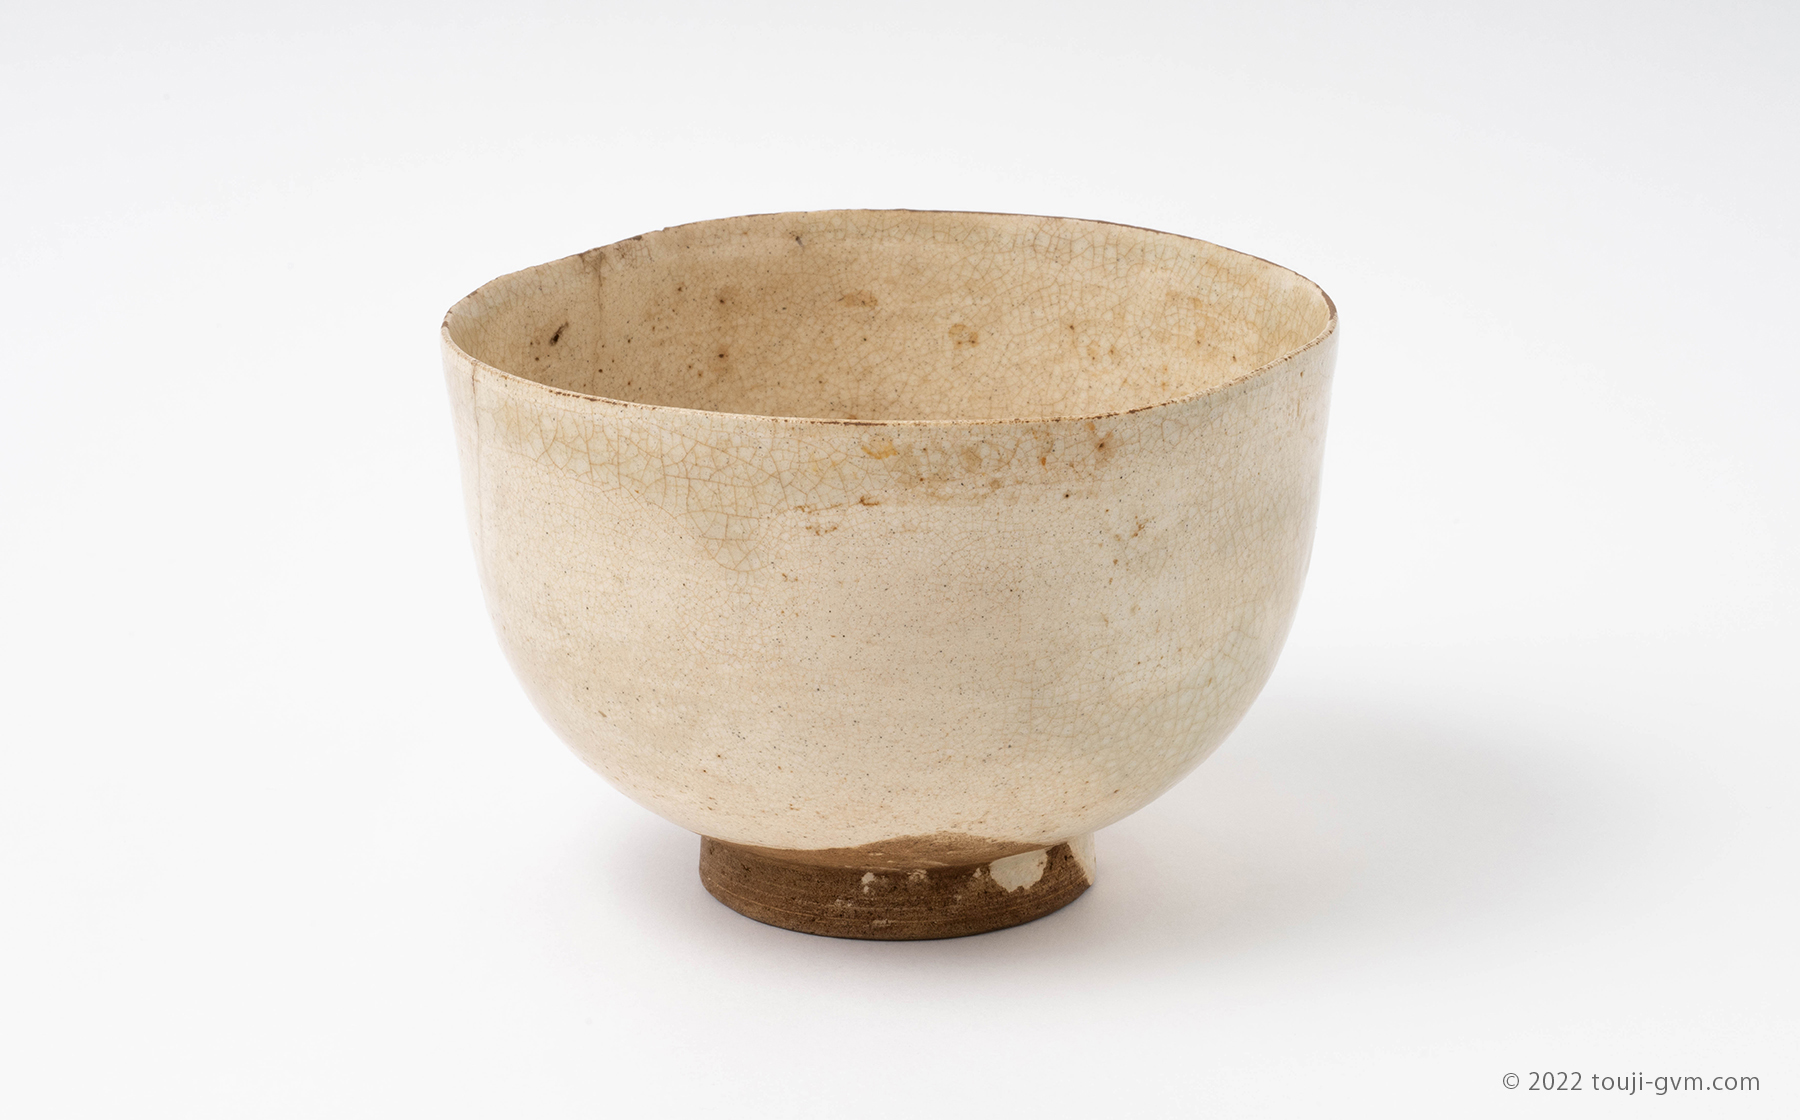 Joseon Dynasty Tea Bowl with Egg-like Glaze